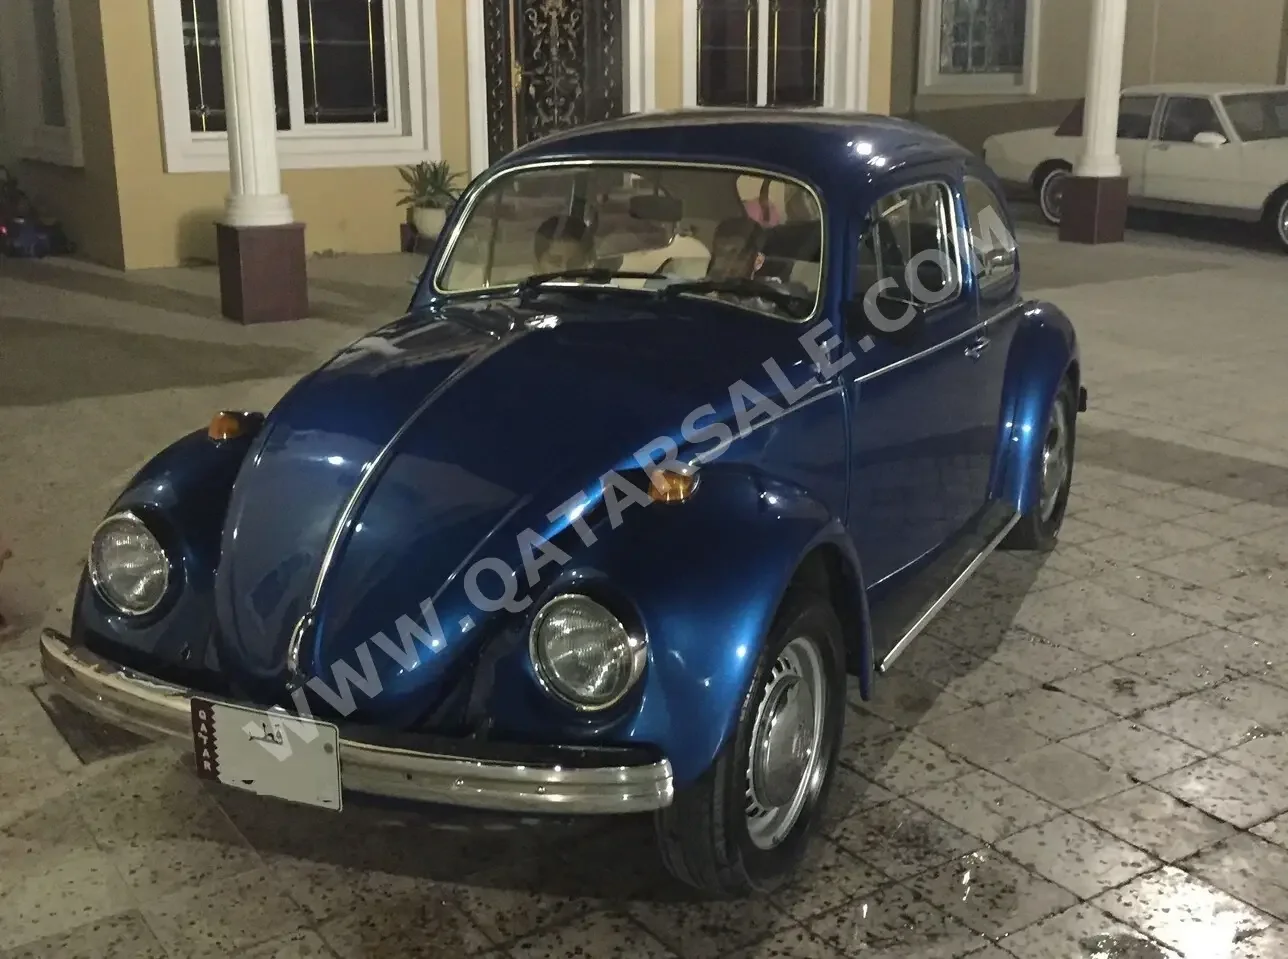 Volkswagen  Beetle  1970  Manual  0 Km  4 Cylinder  Rear Wheel Drive (RWD)  Hatchback  Blue